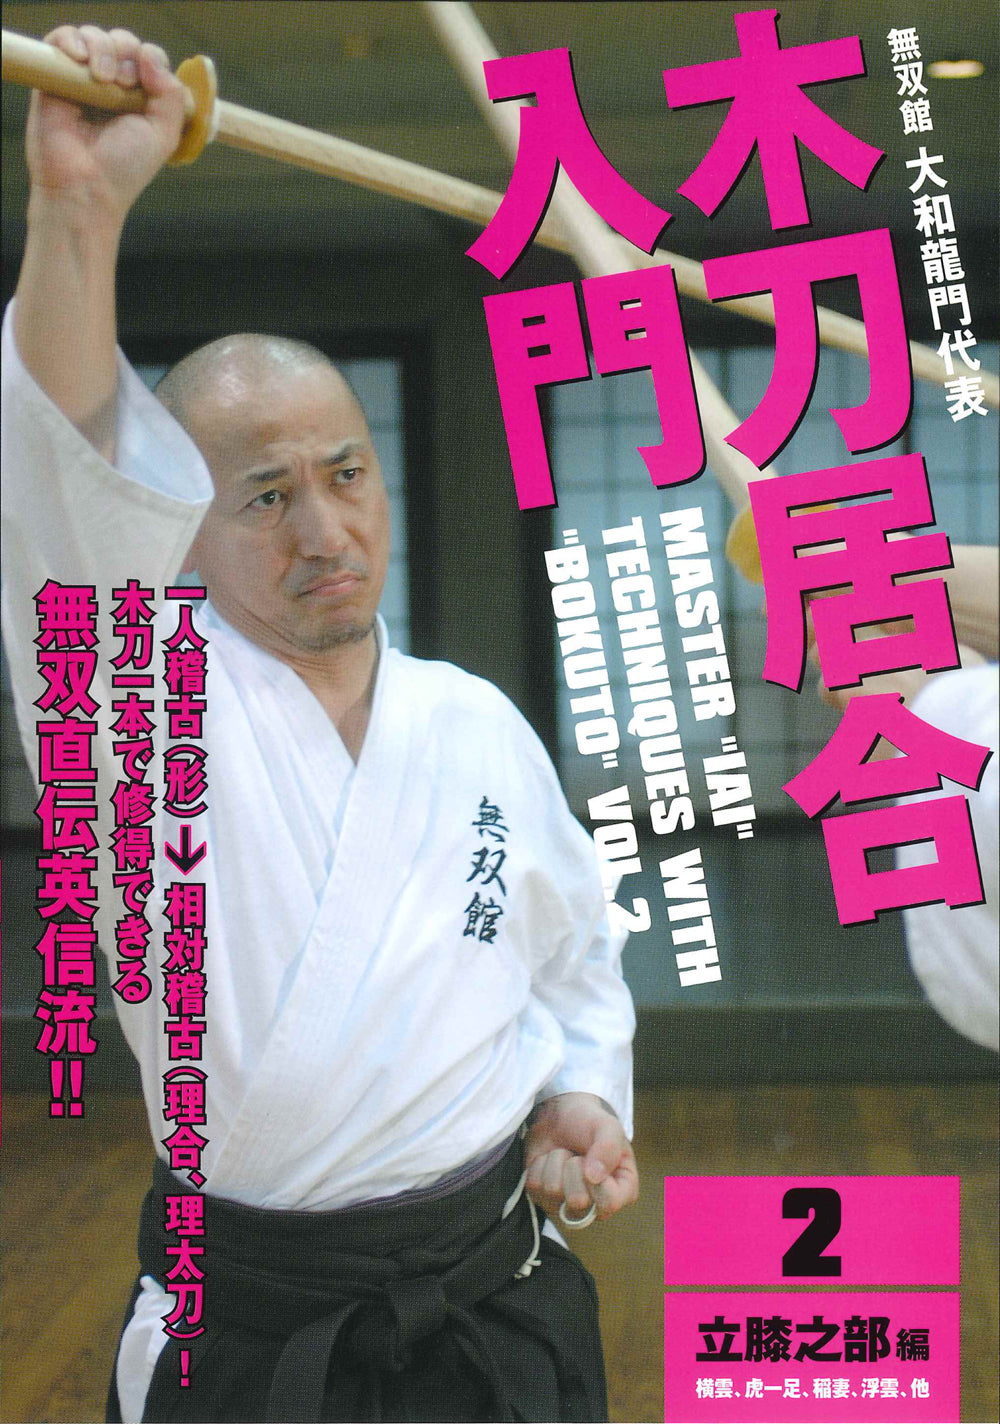 Master Iai Techniques with Bokuto Vol 2 DVD by Ryumon Yamato